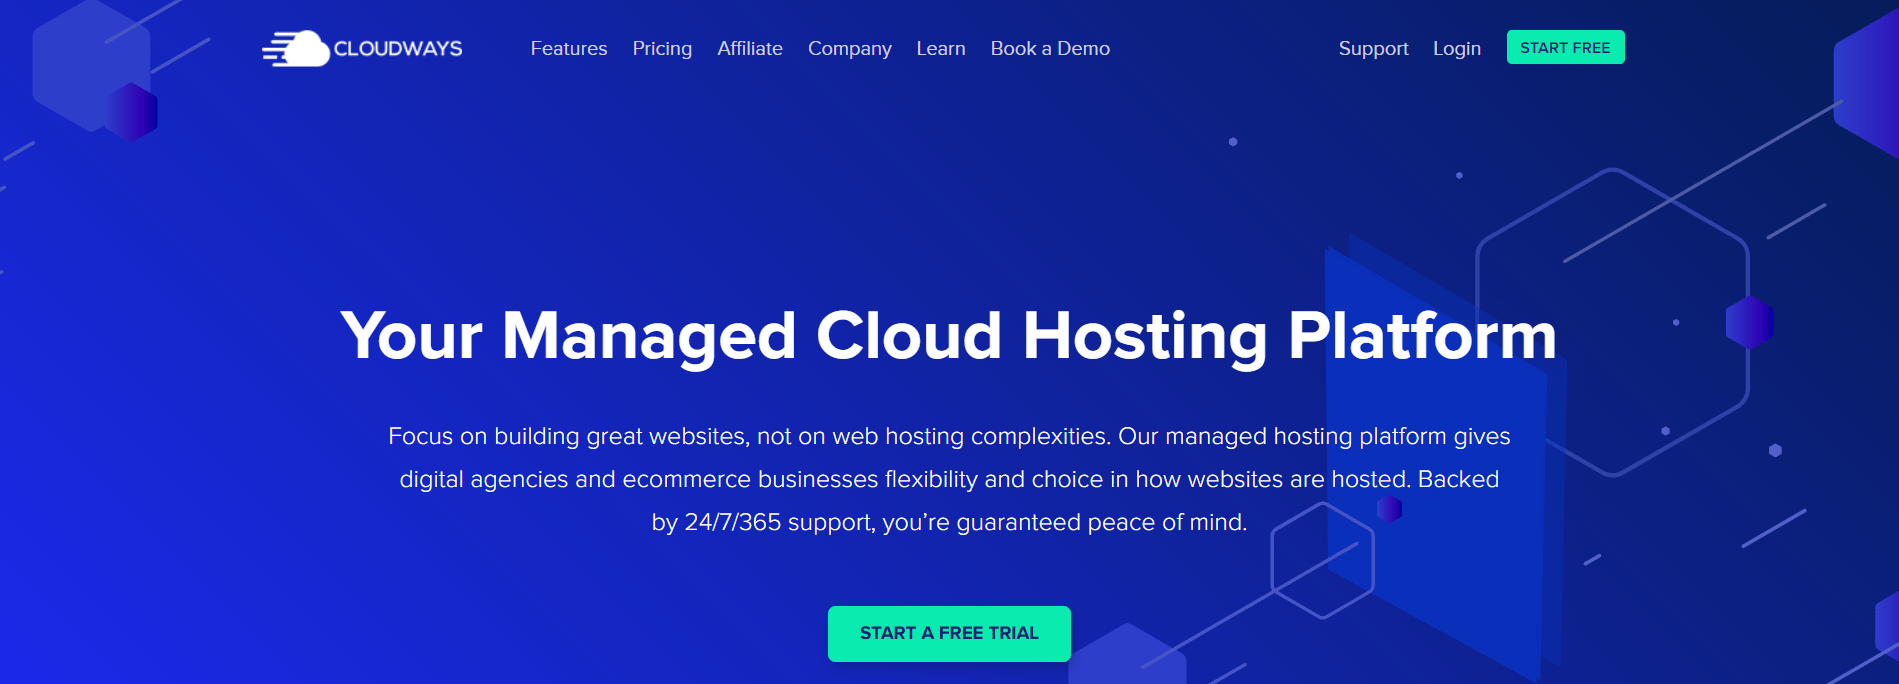 Cloudways cloud managed hosting